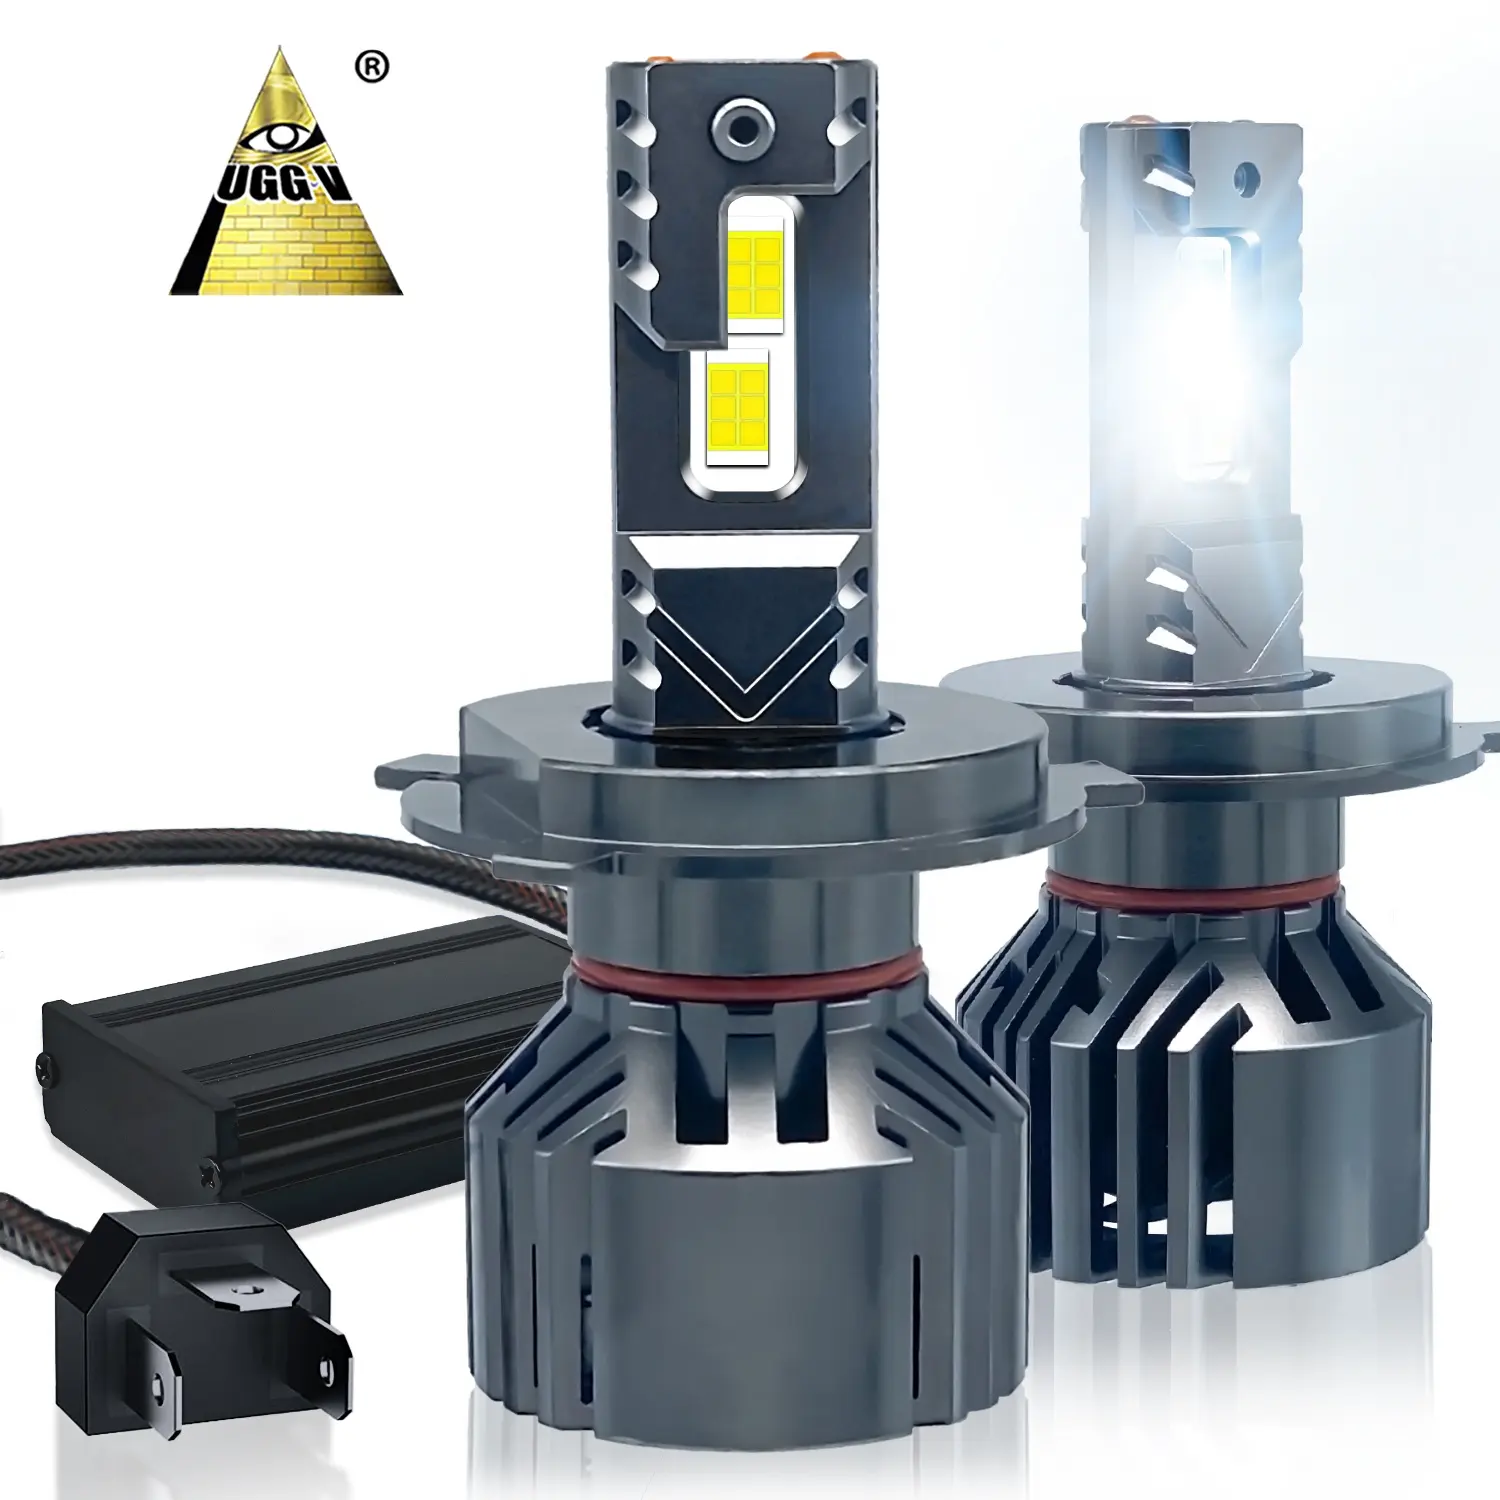 UGF25 H4 Light LED OEM Factory Selling High Power Led Headlight for Car Headlight Lamp 9-16V Led Headlight H4 Led Bulb 12V IP68